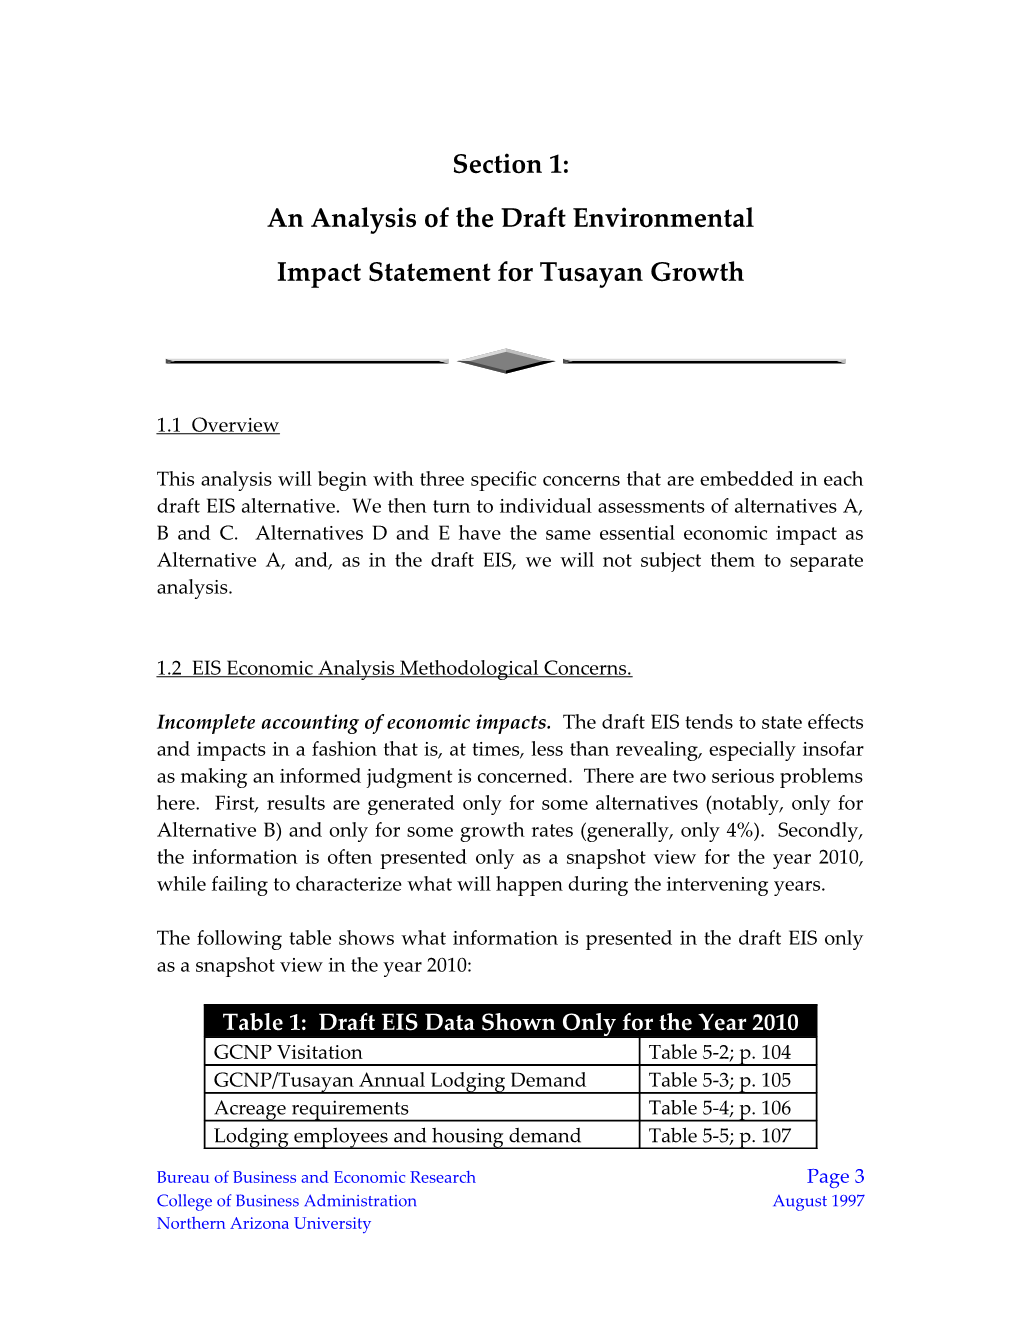 Analysis of the Draft Environmental